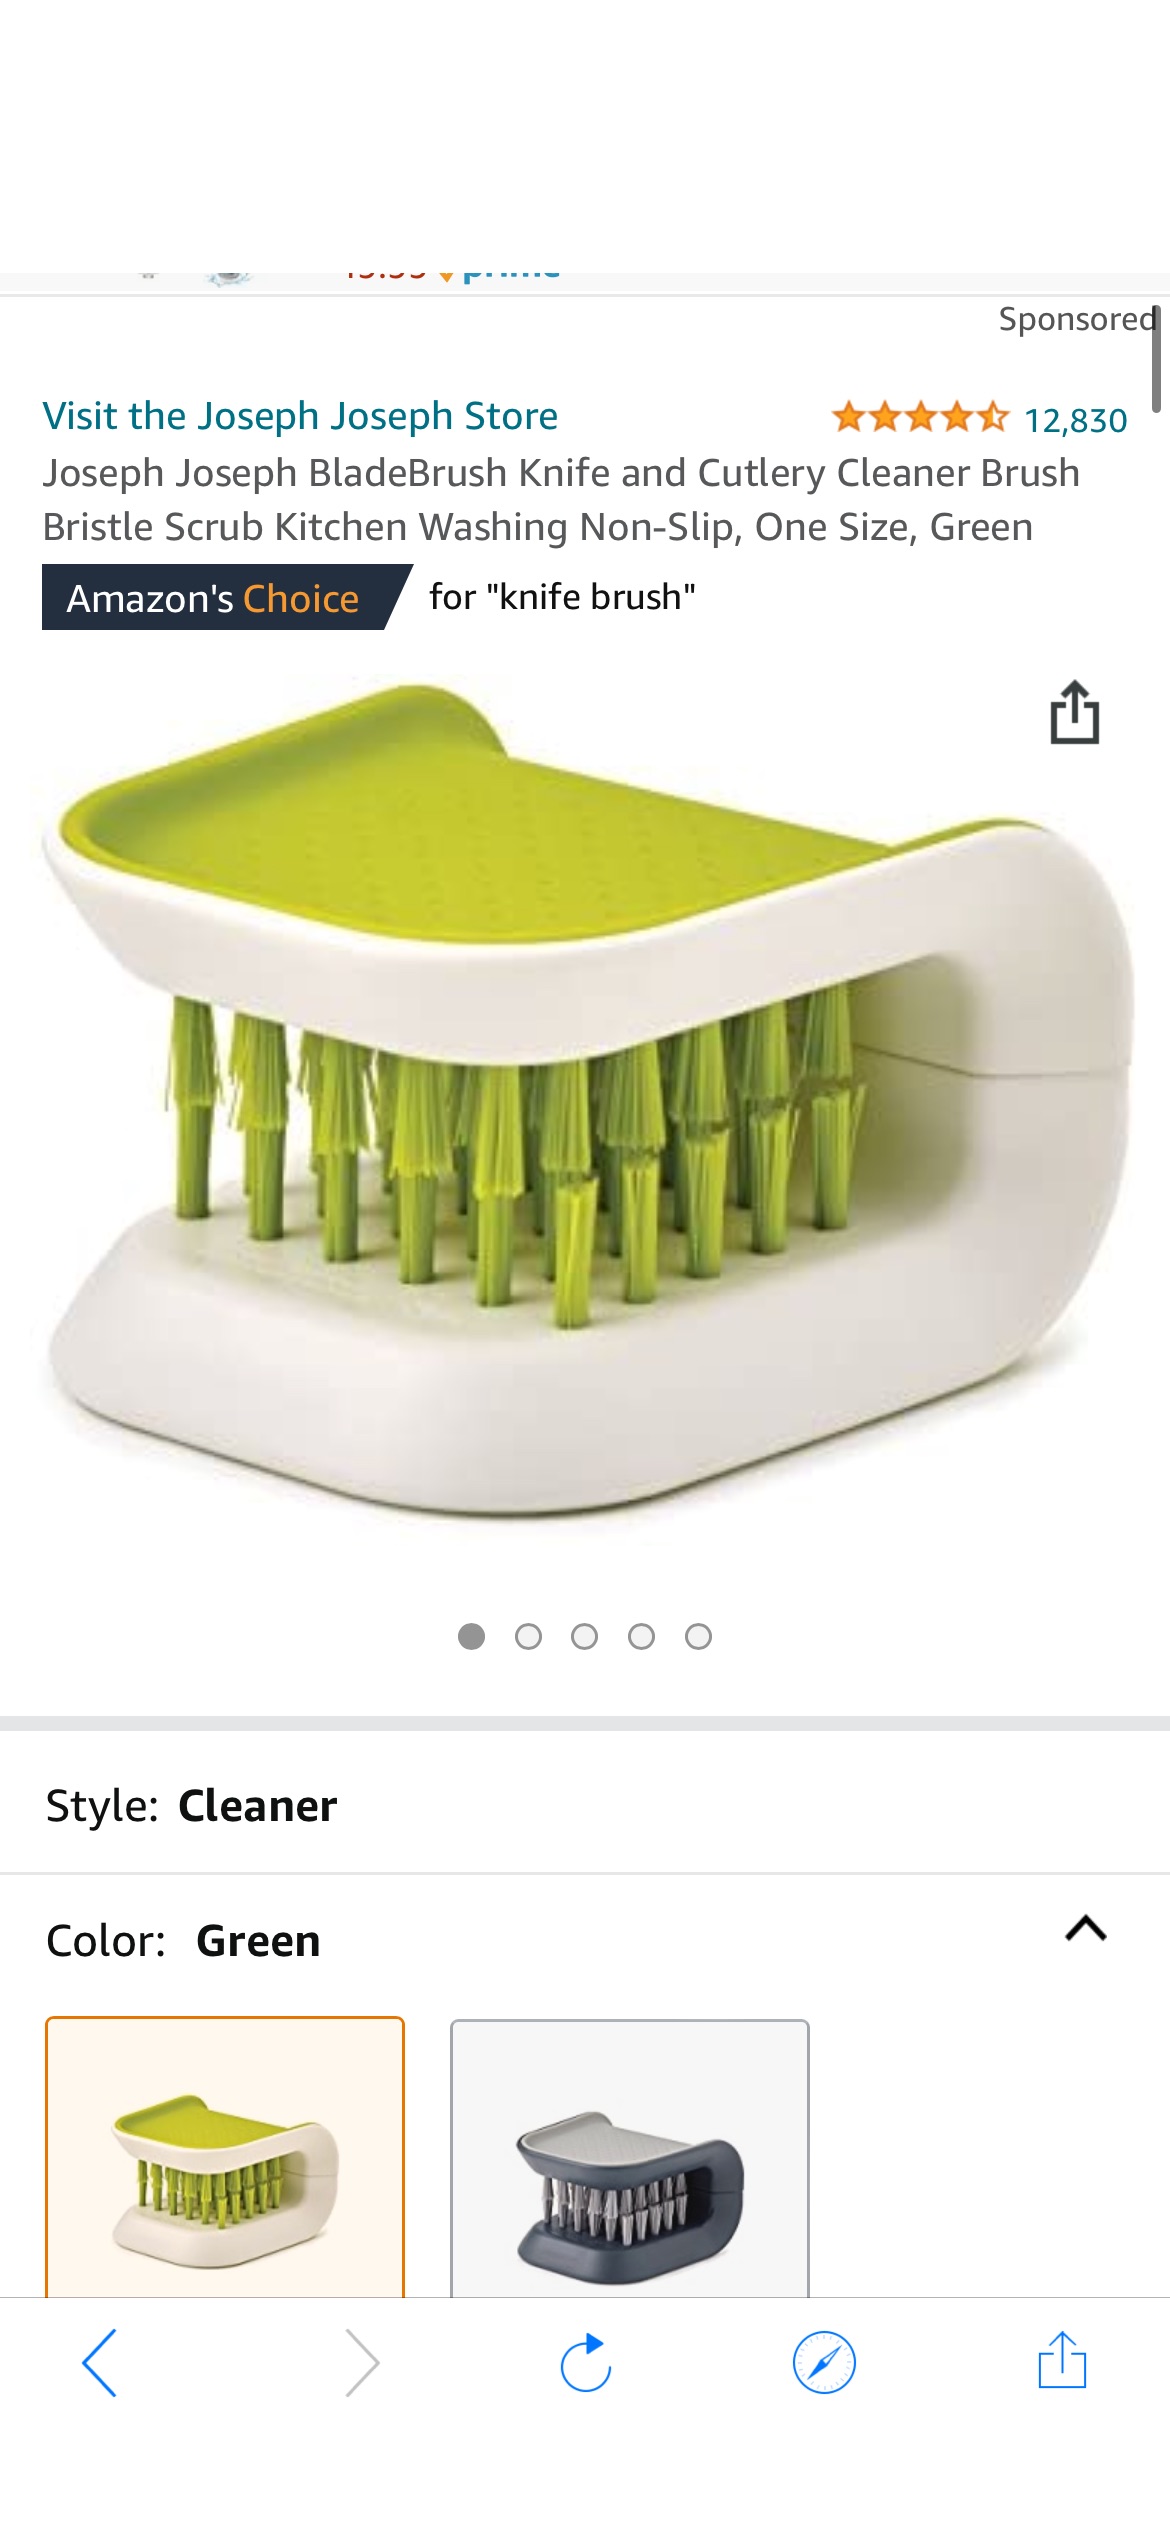 Amazon.com: Joseph Joseph BladeBrush Knife and Cutlery Cleaner Brush Bristle Scrub Kitchen Washing Non-Slip, One Size, Green : Health & Household 刷子优惠